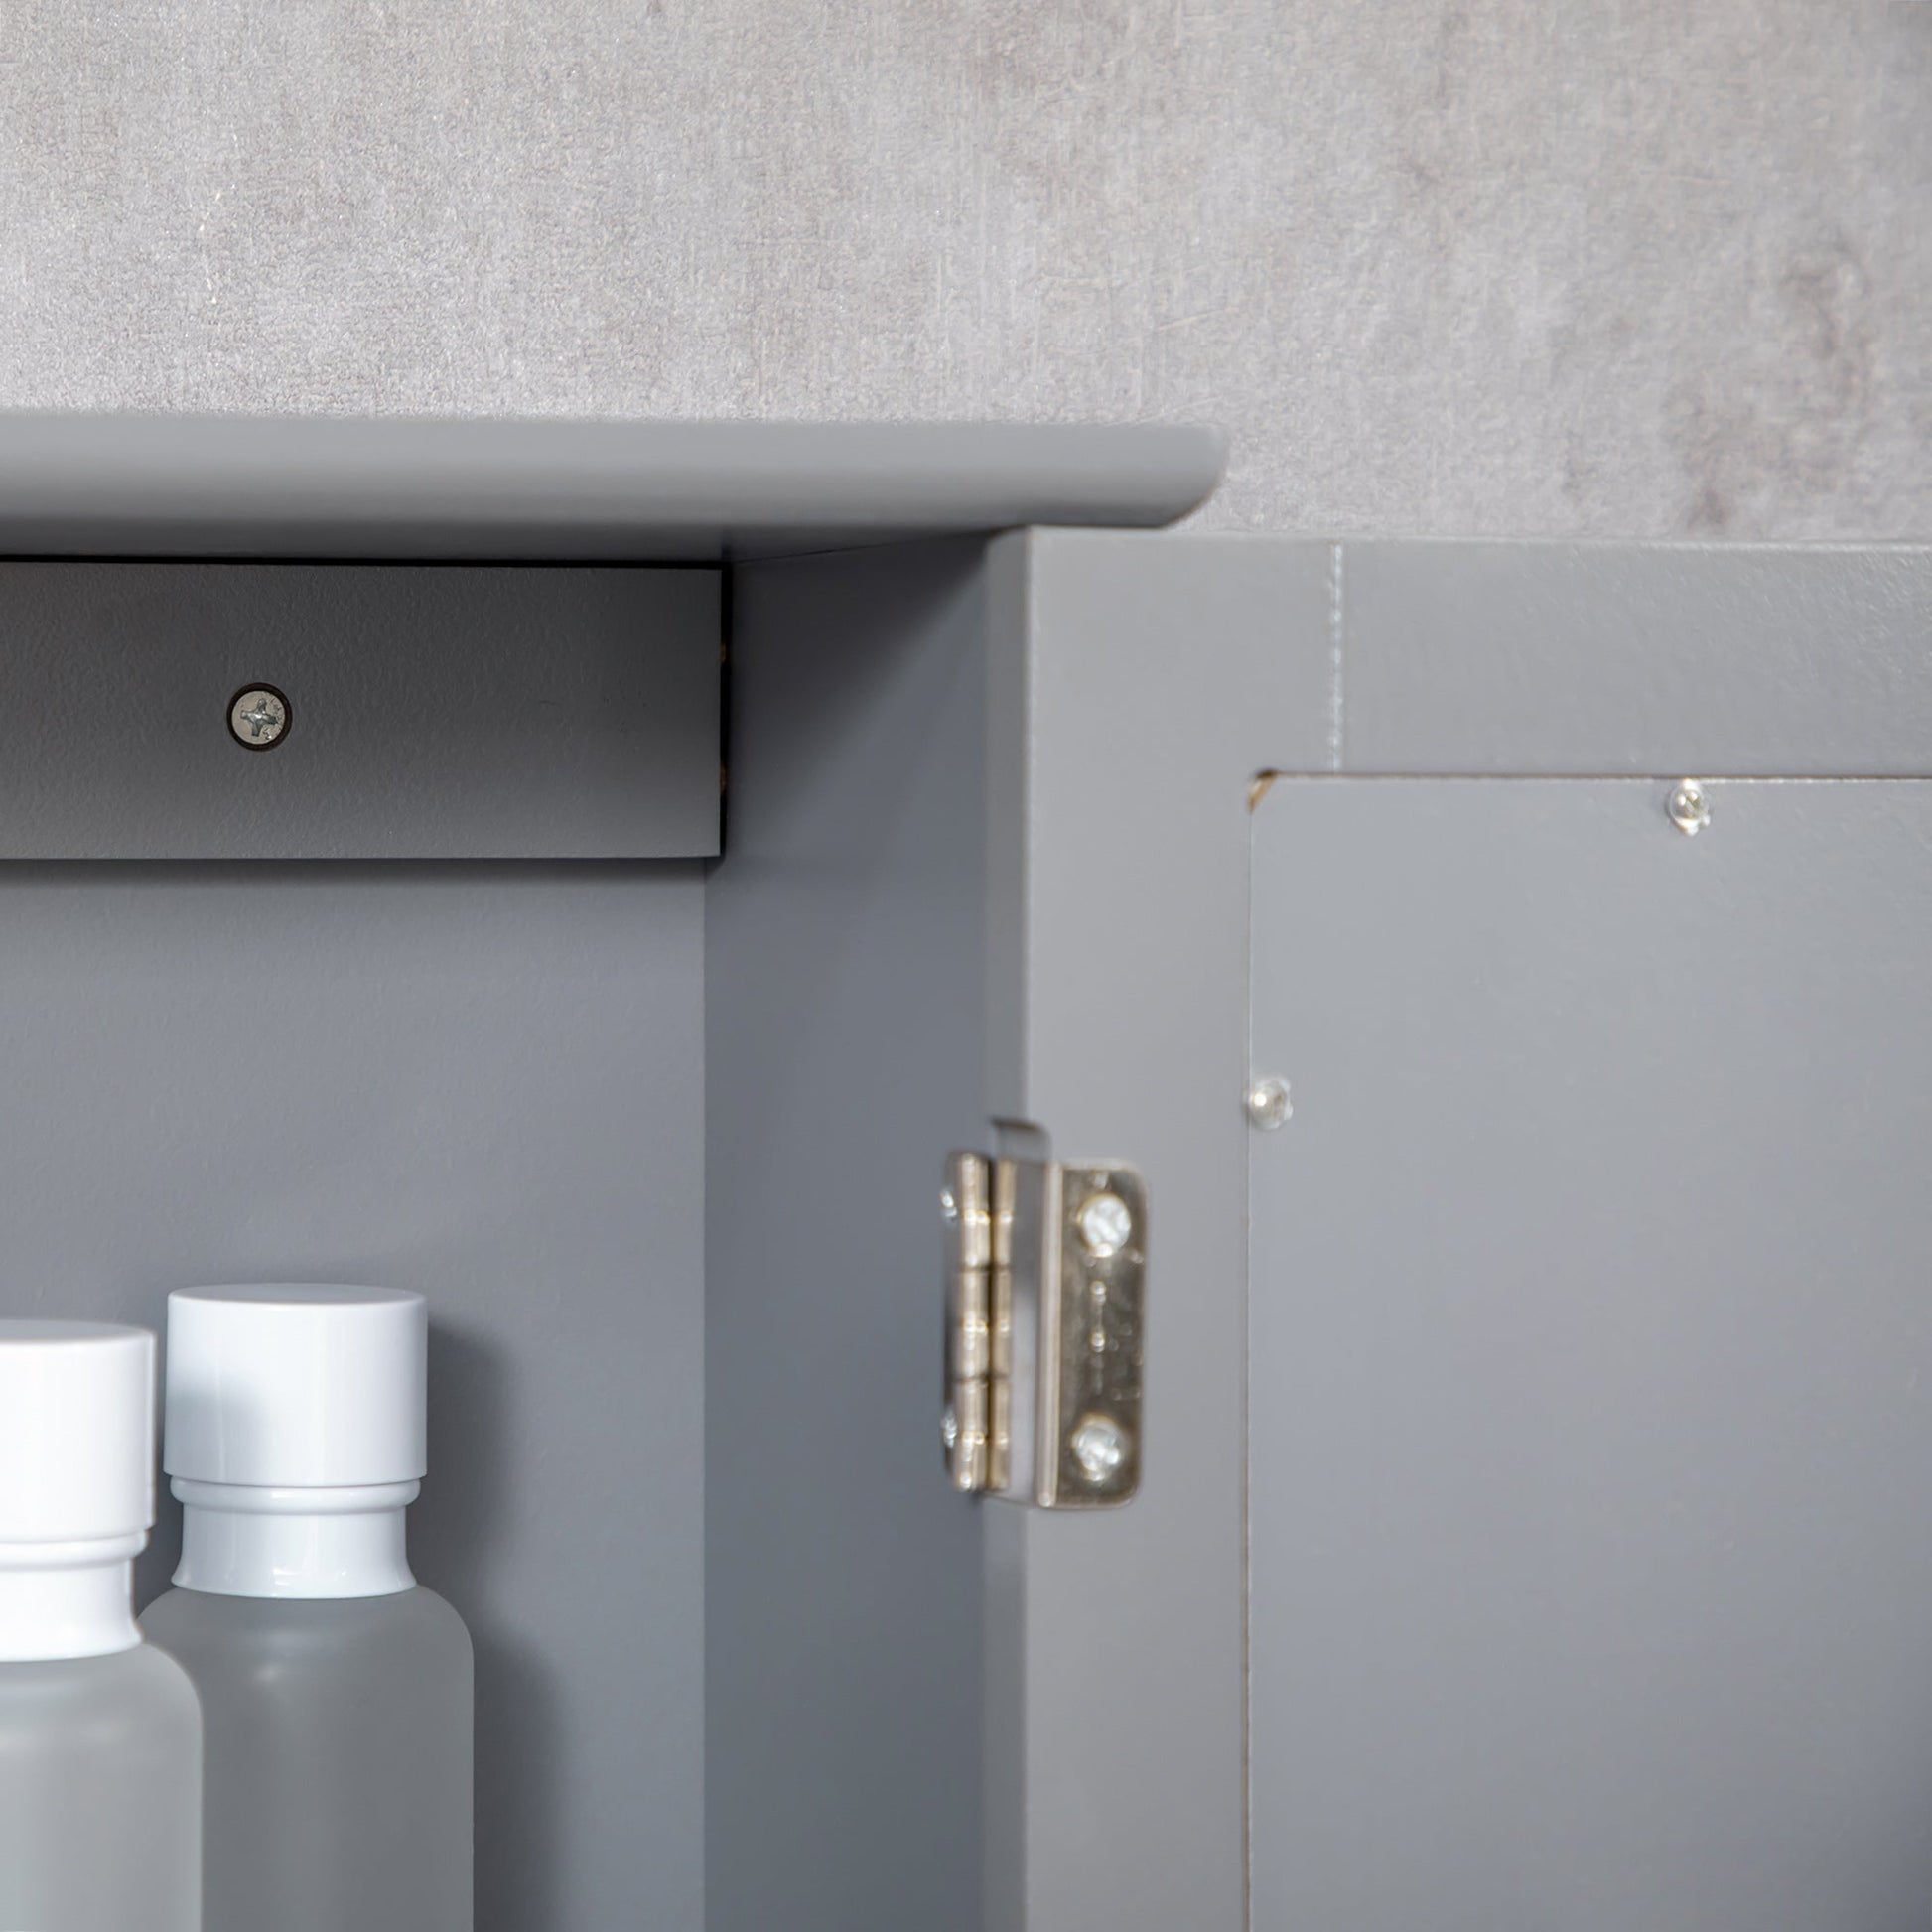 Bathroom Mirror Cabinet, Wall Mounted Medicine Cabinet, Storage Cupboard with Door and Shelves, Grey at Gallery Canada